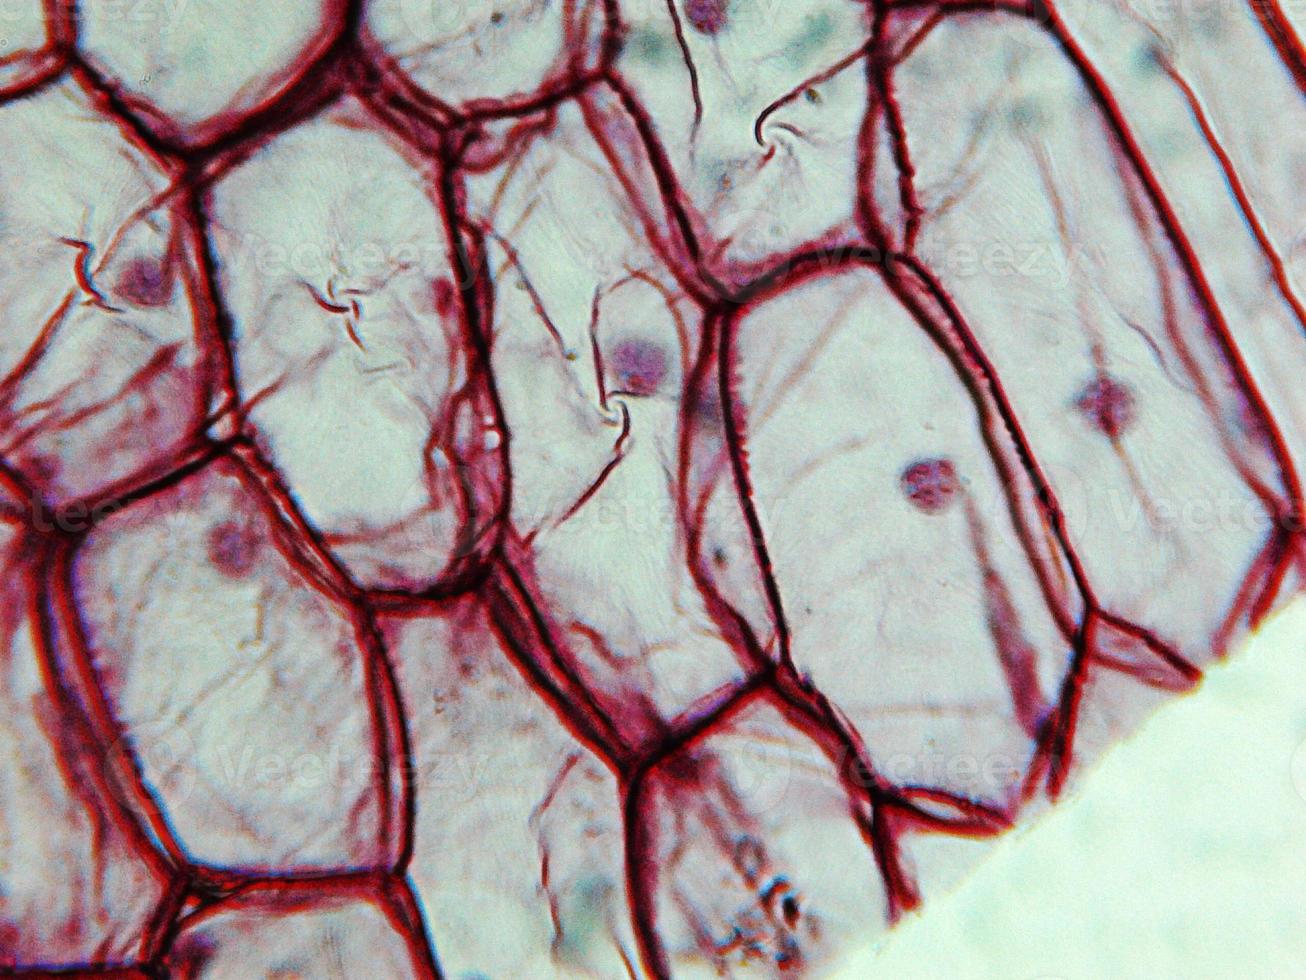 micrografia de epiderme de cebola foto